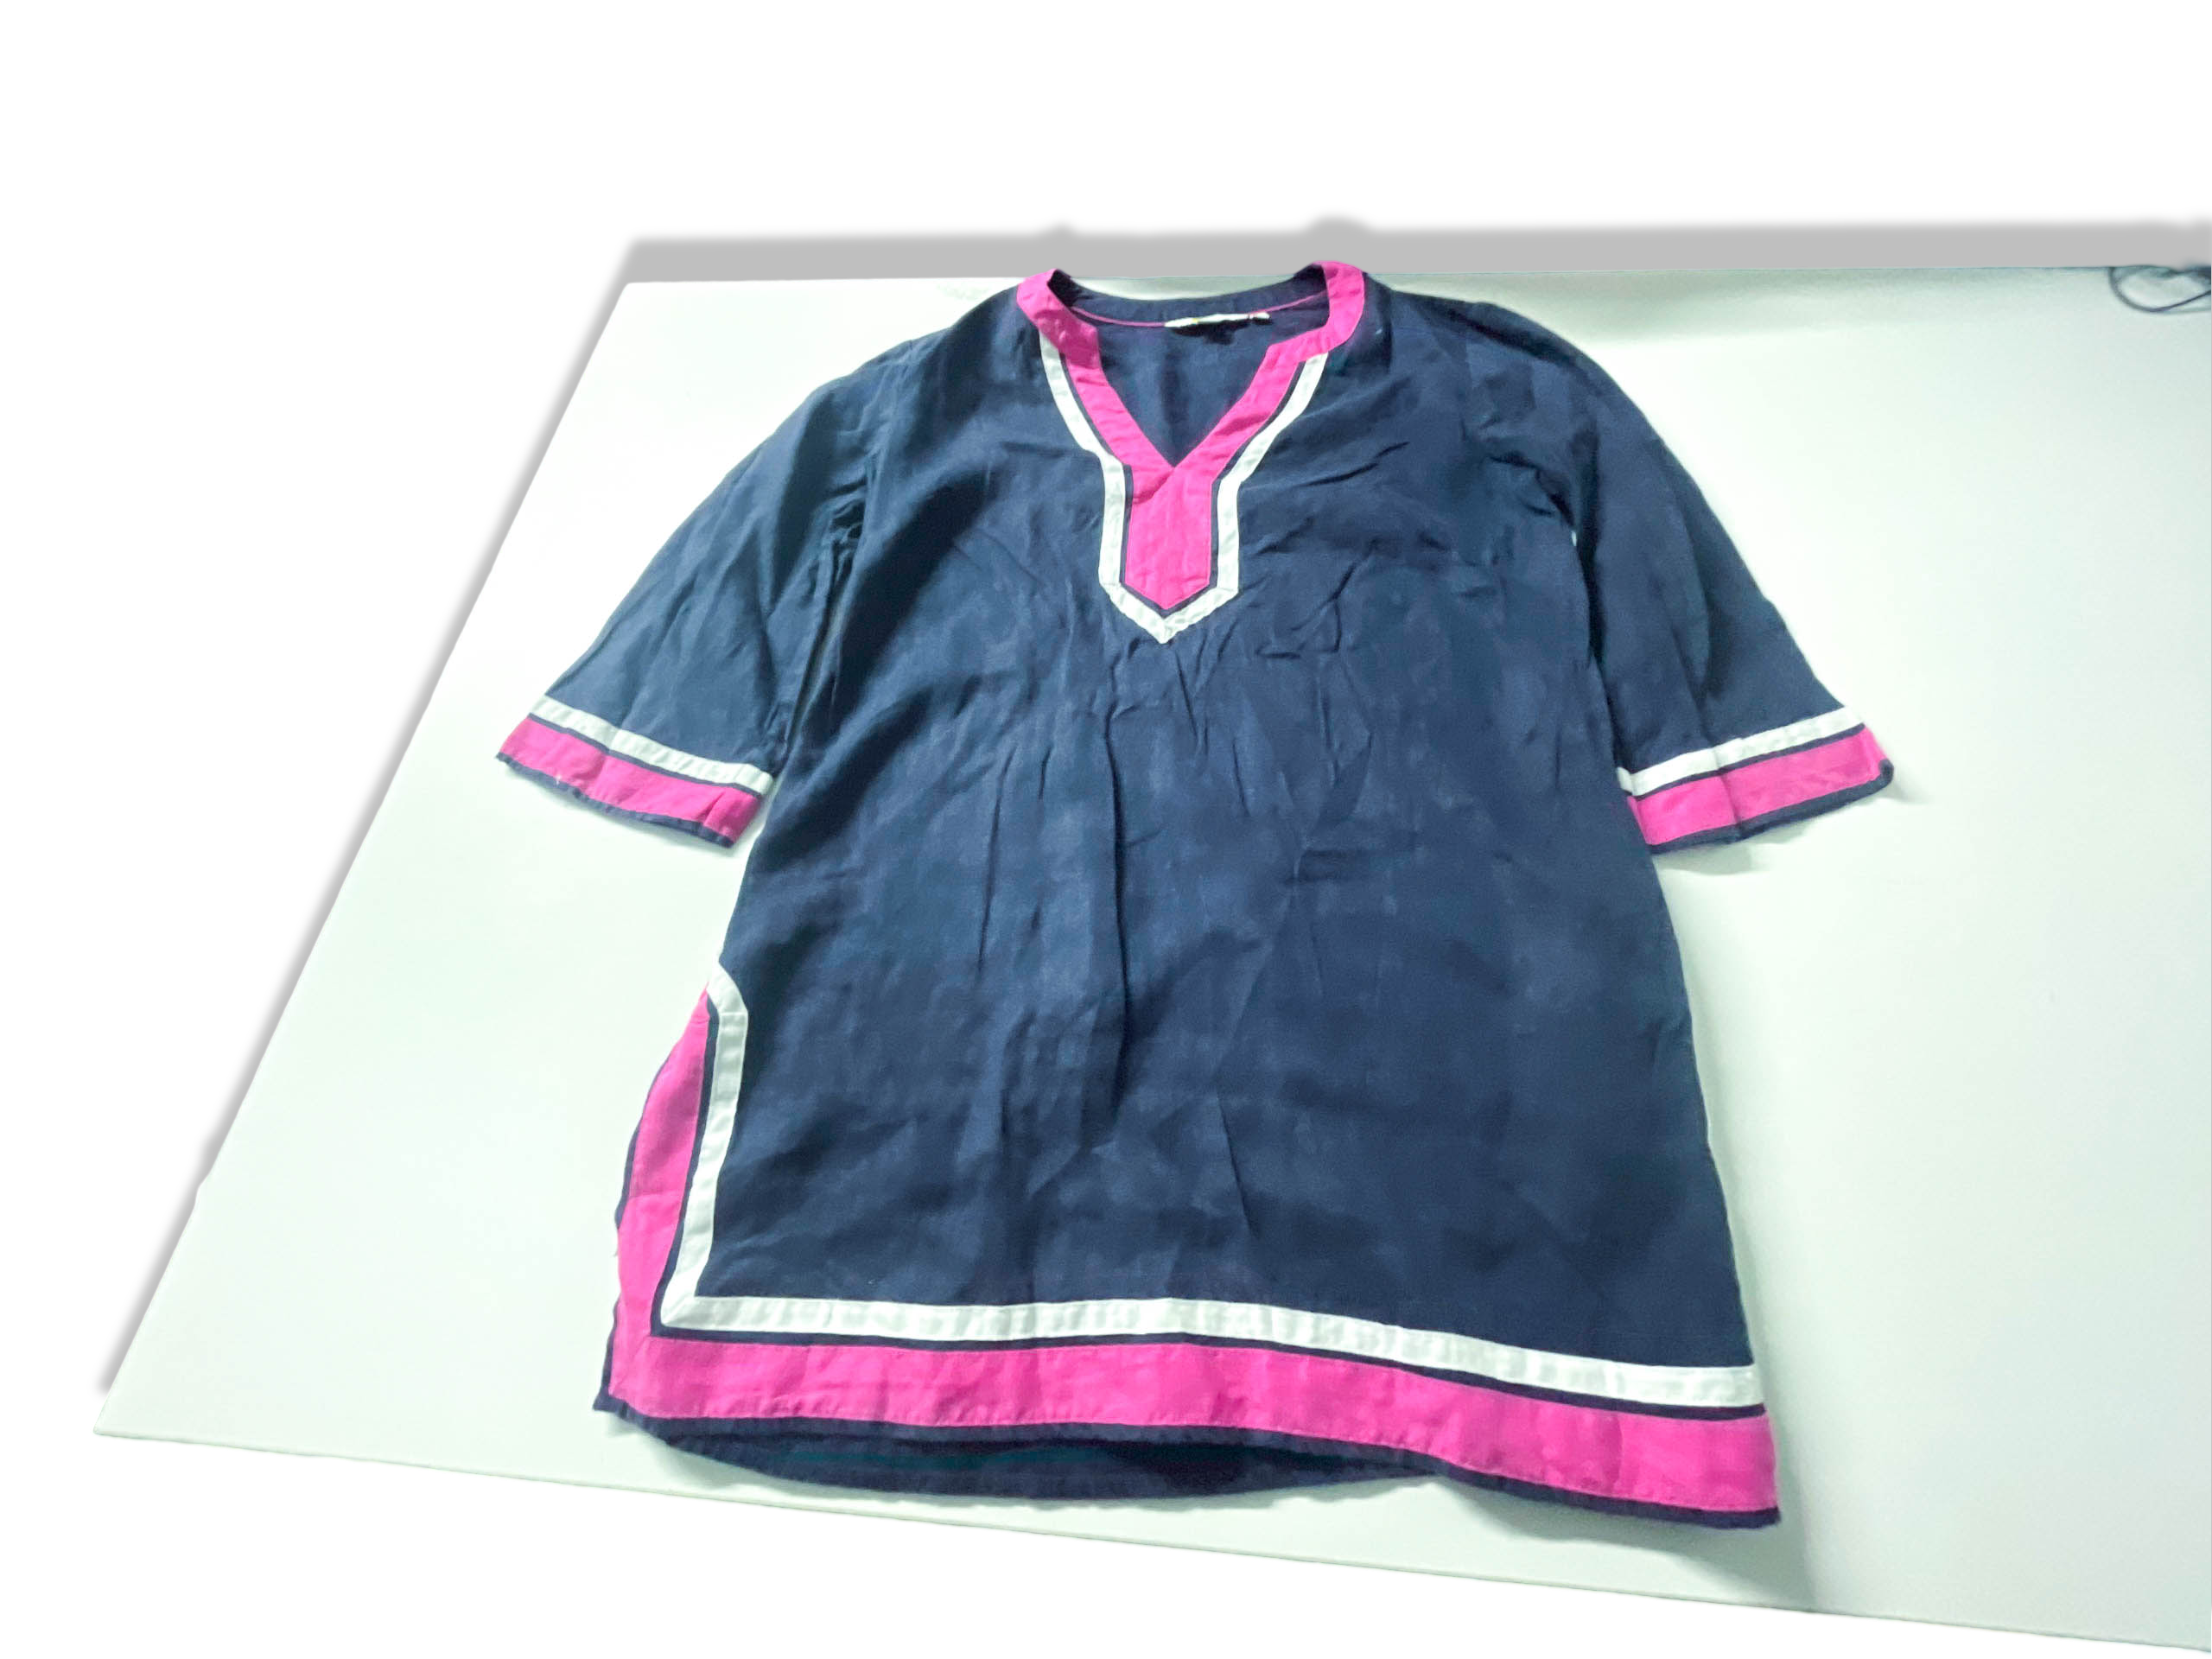 Boden Cleo Linen Tunic Top Kaftan Navy Blue Pink Women's UK 12|L29W20|SKU 3940